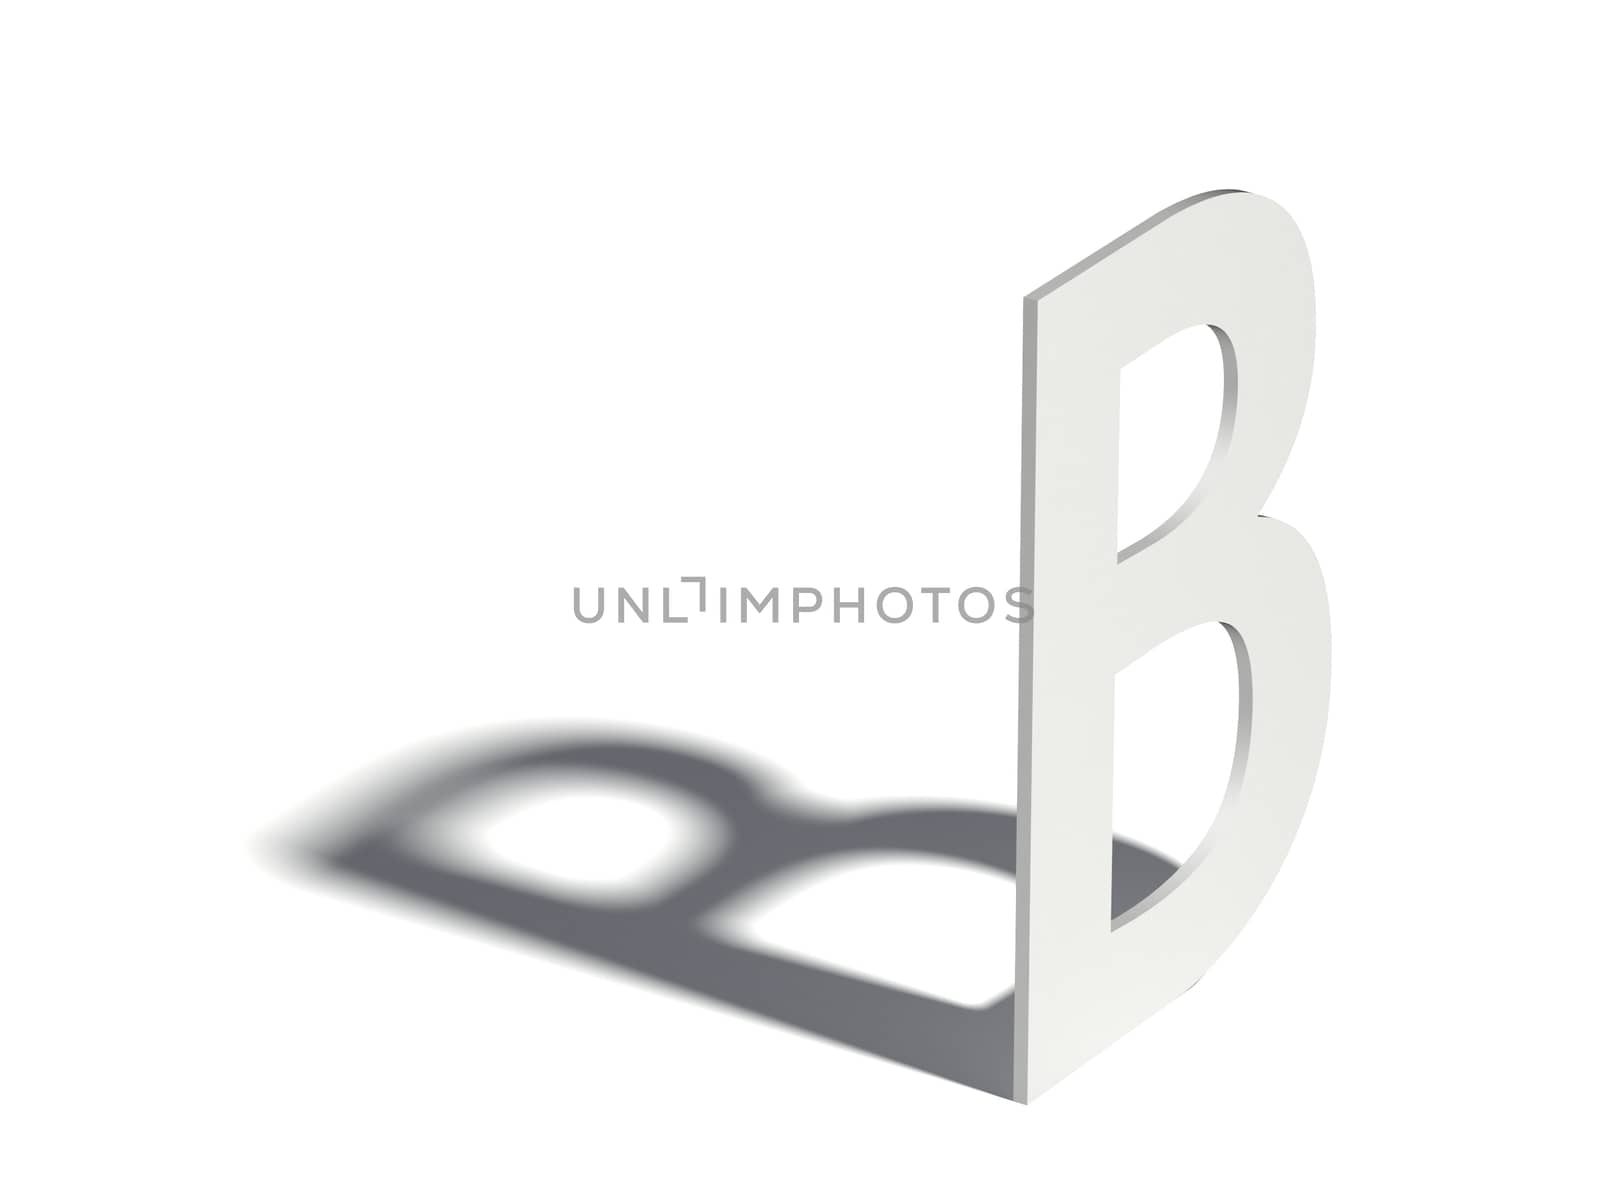 Drop shadow font. Letter B. 3D by djmilic